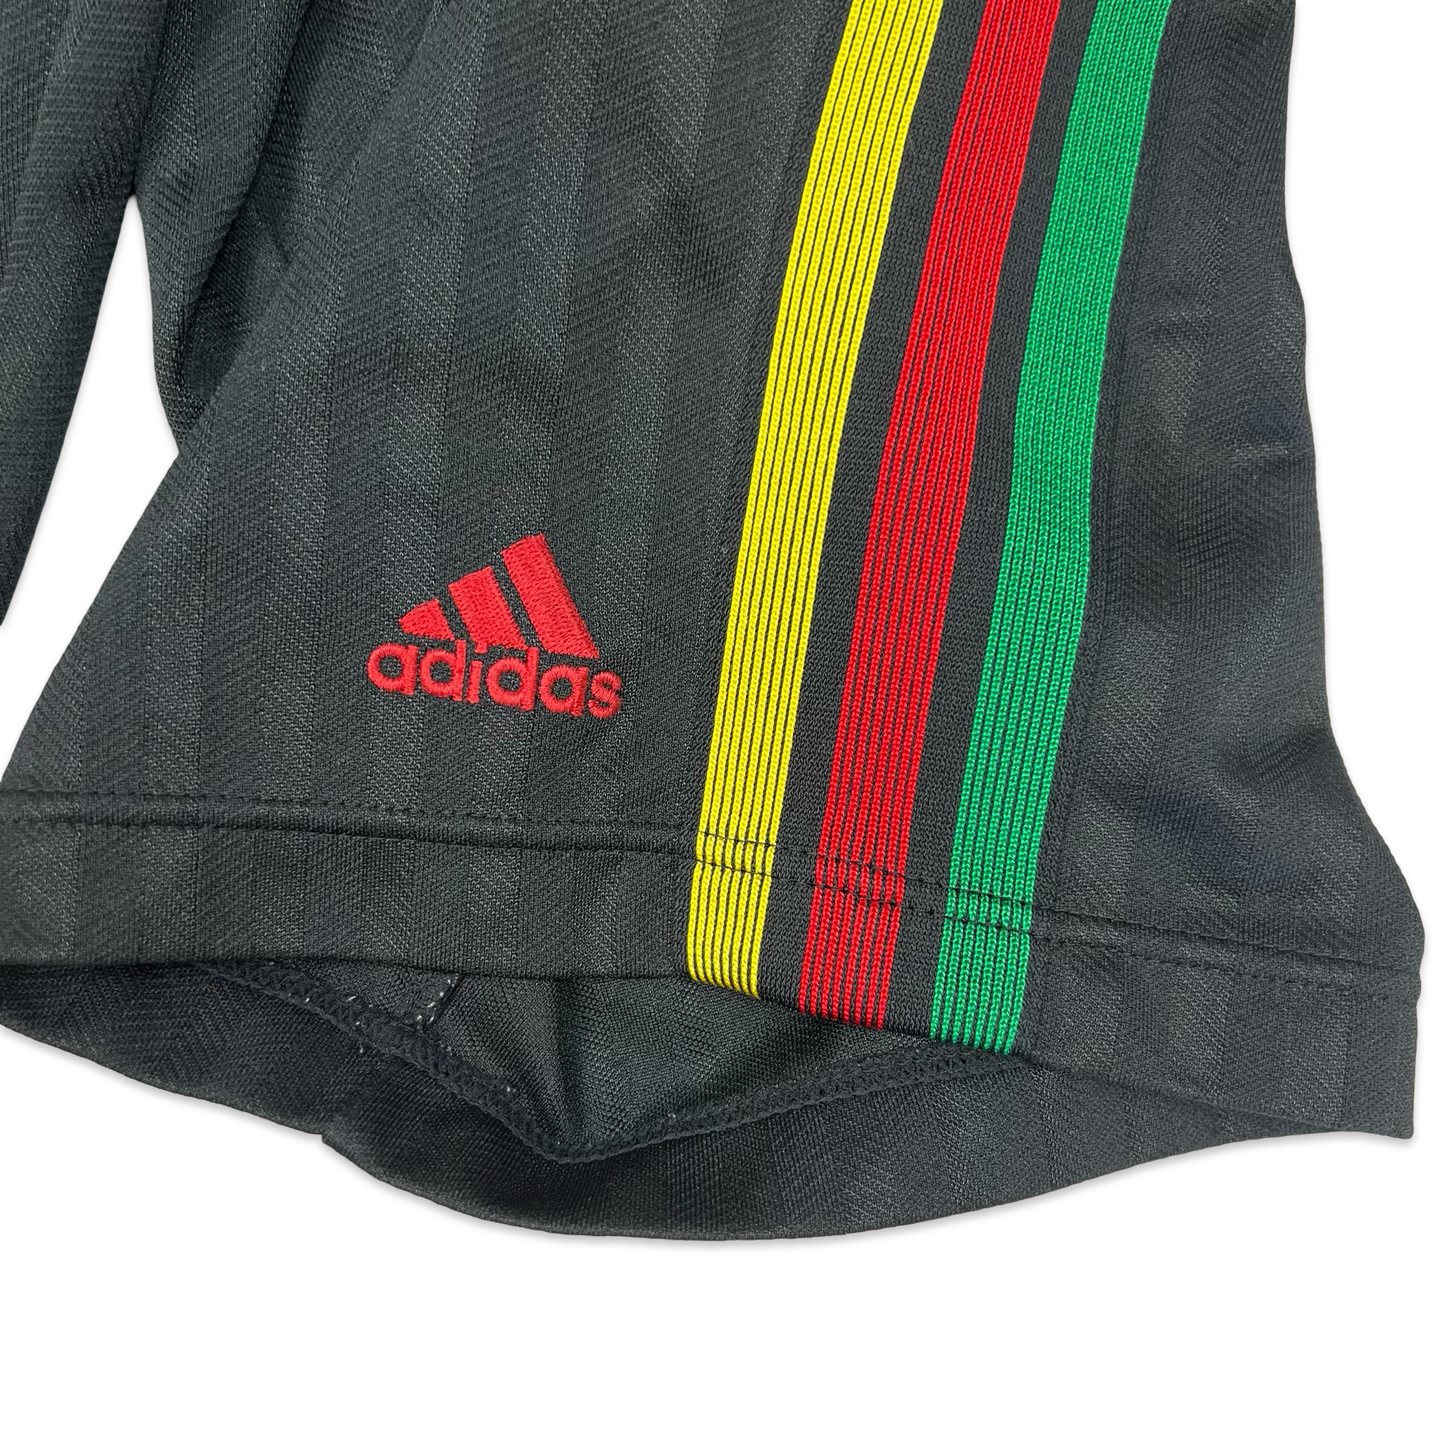 00's Adidas Black Sport Shorts Yellow Red & Green Stripes M